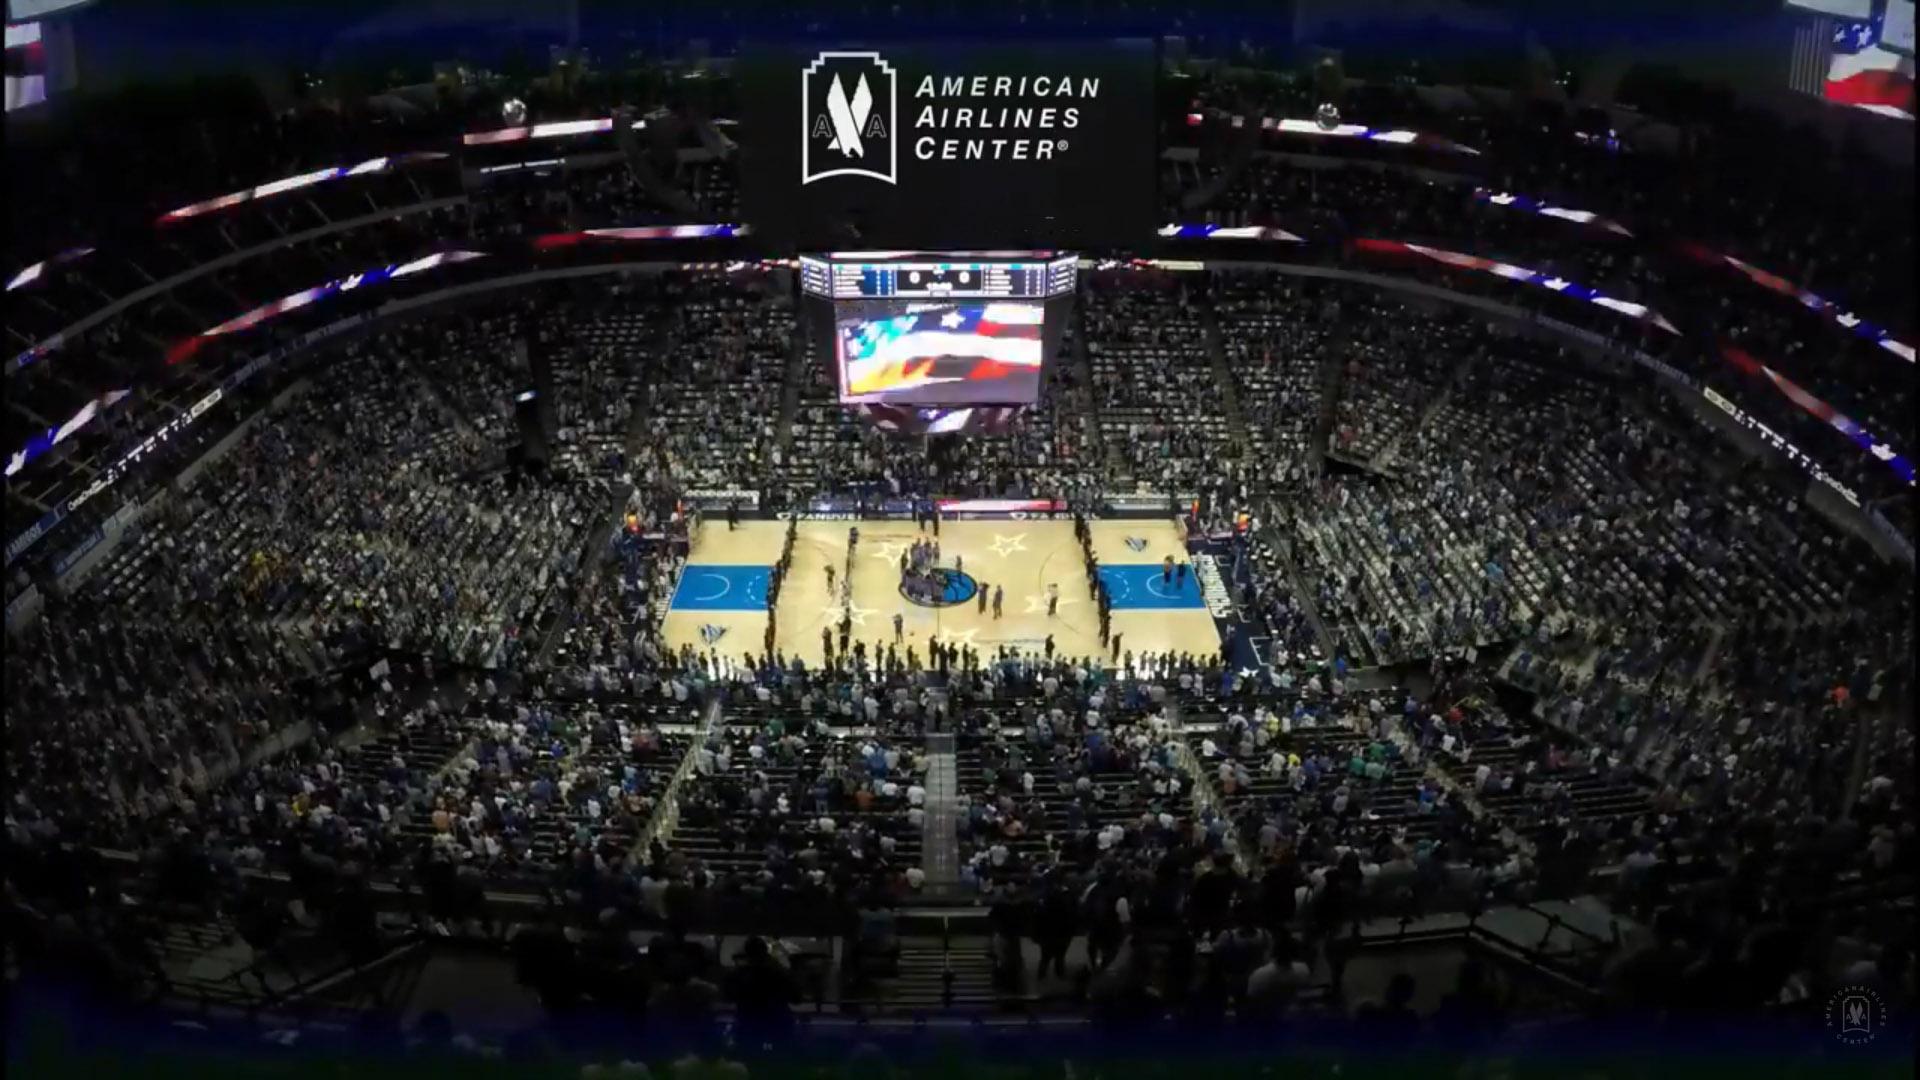 American Airlines Center salles NBA 17 mars 2020